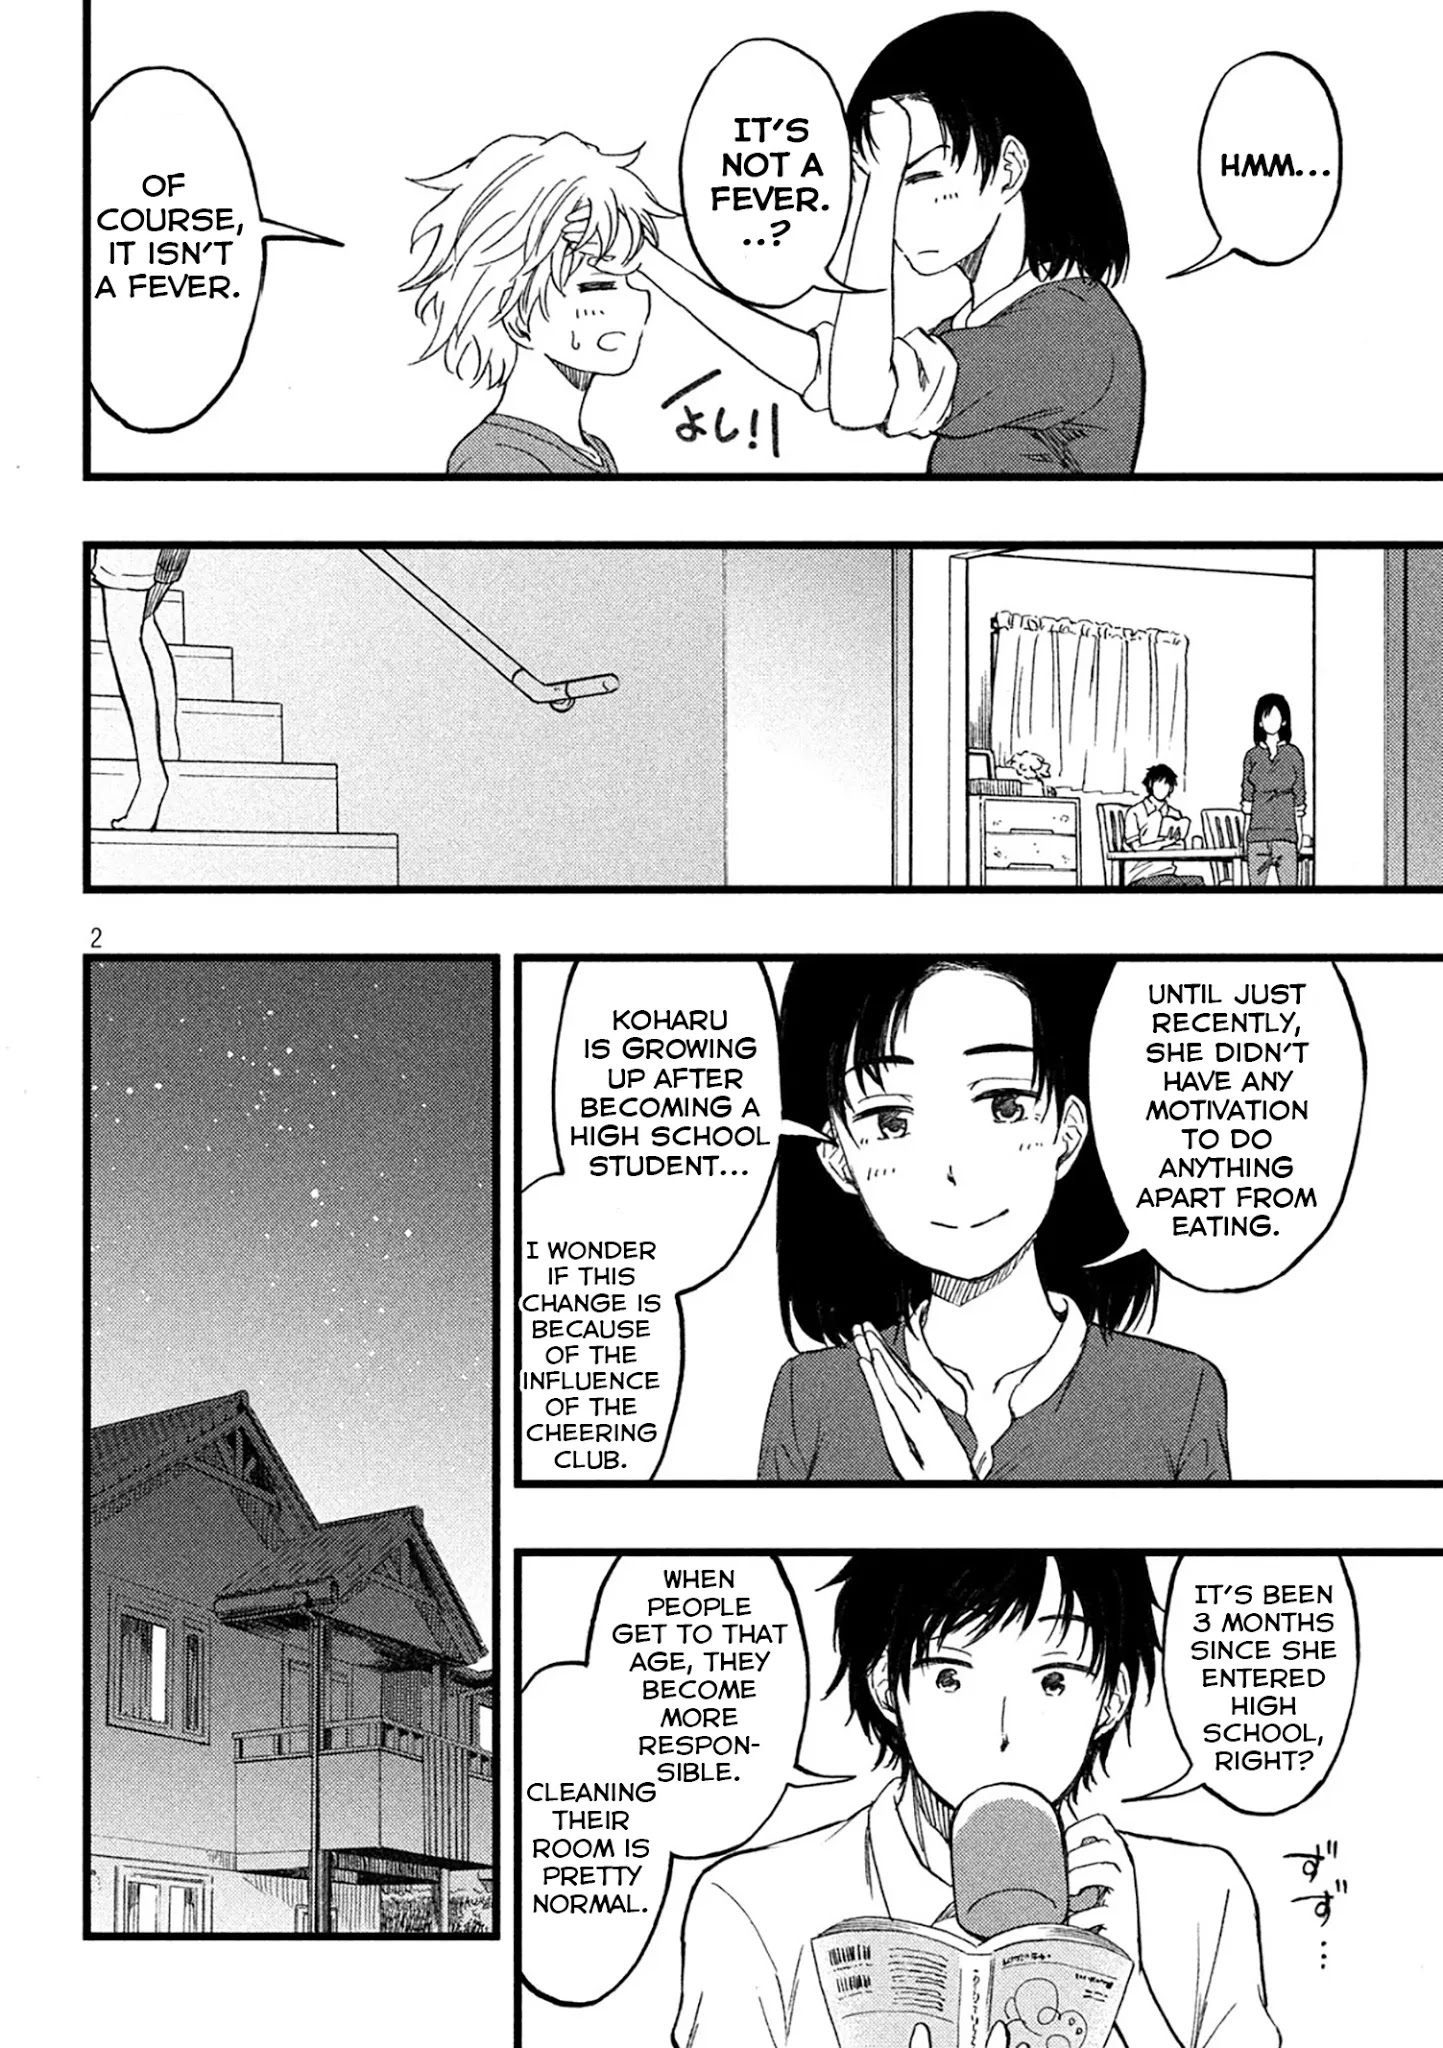 Koharu Haru! - Page 2